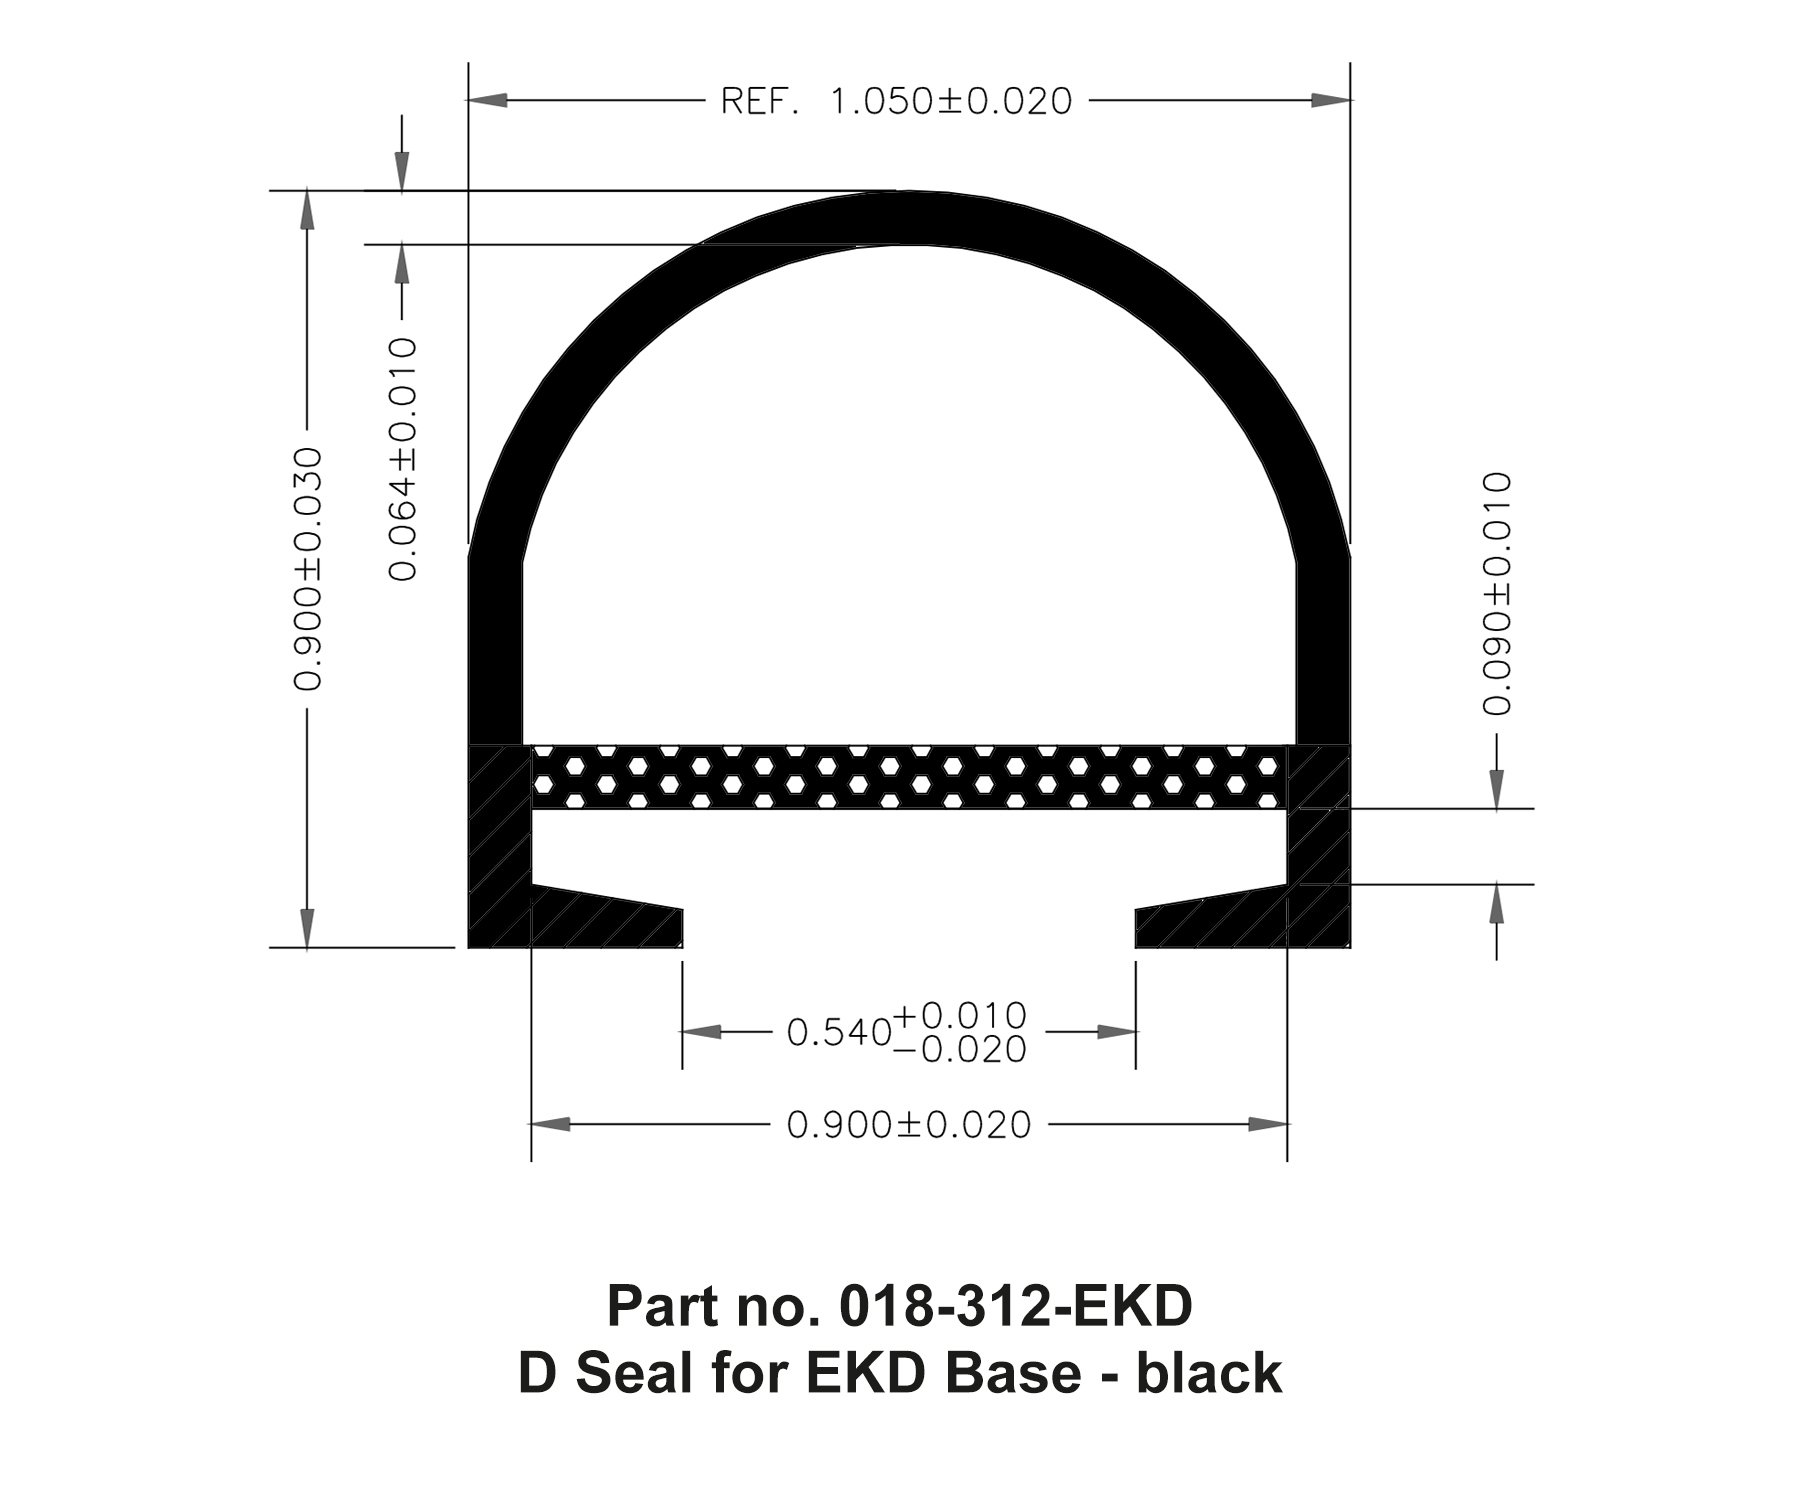 AP Products 018-312-EKD Black 1 Inch x 15/16 Inch x 35 Foot D Seal